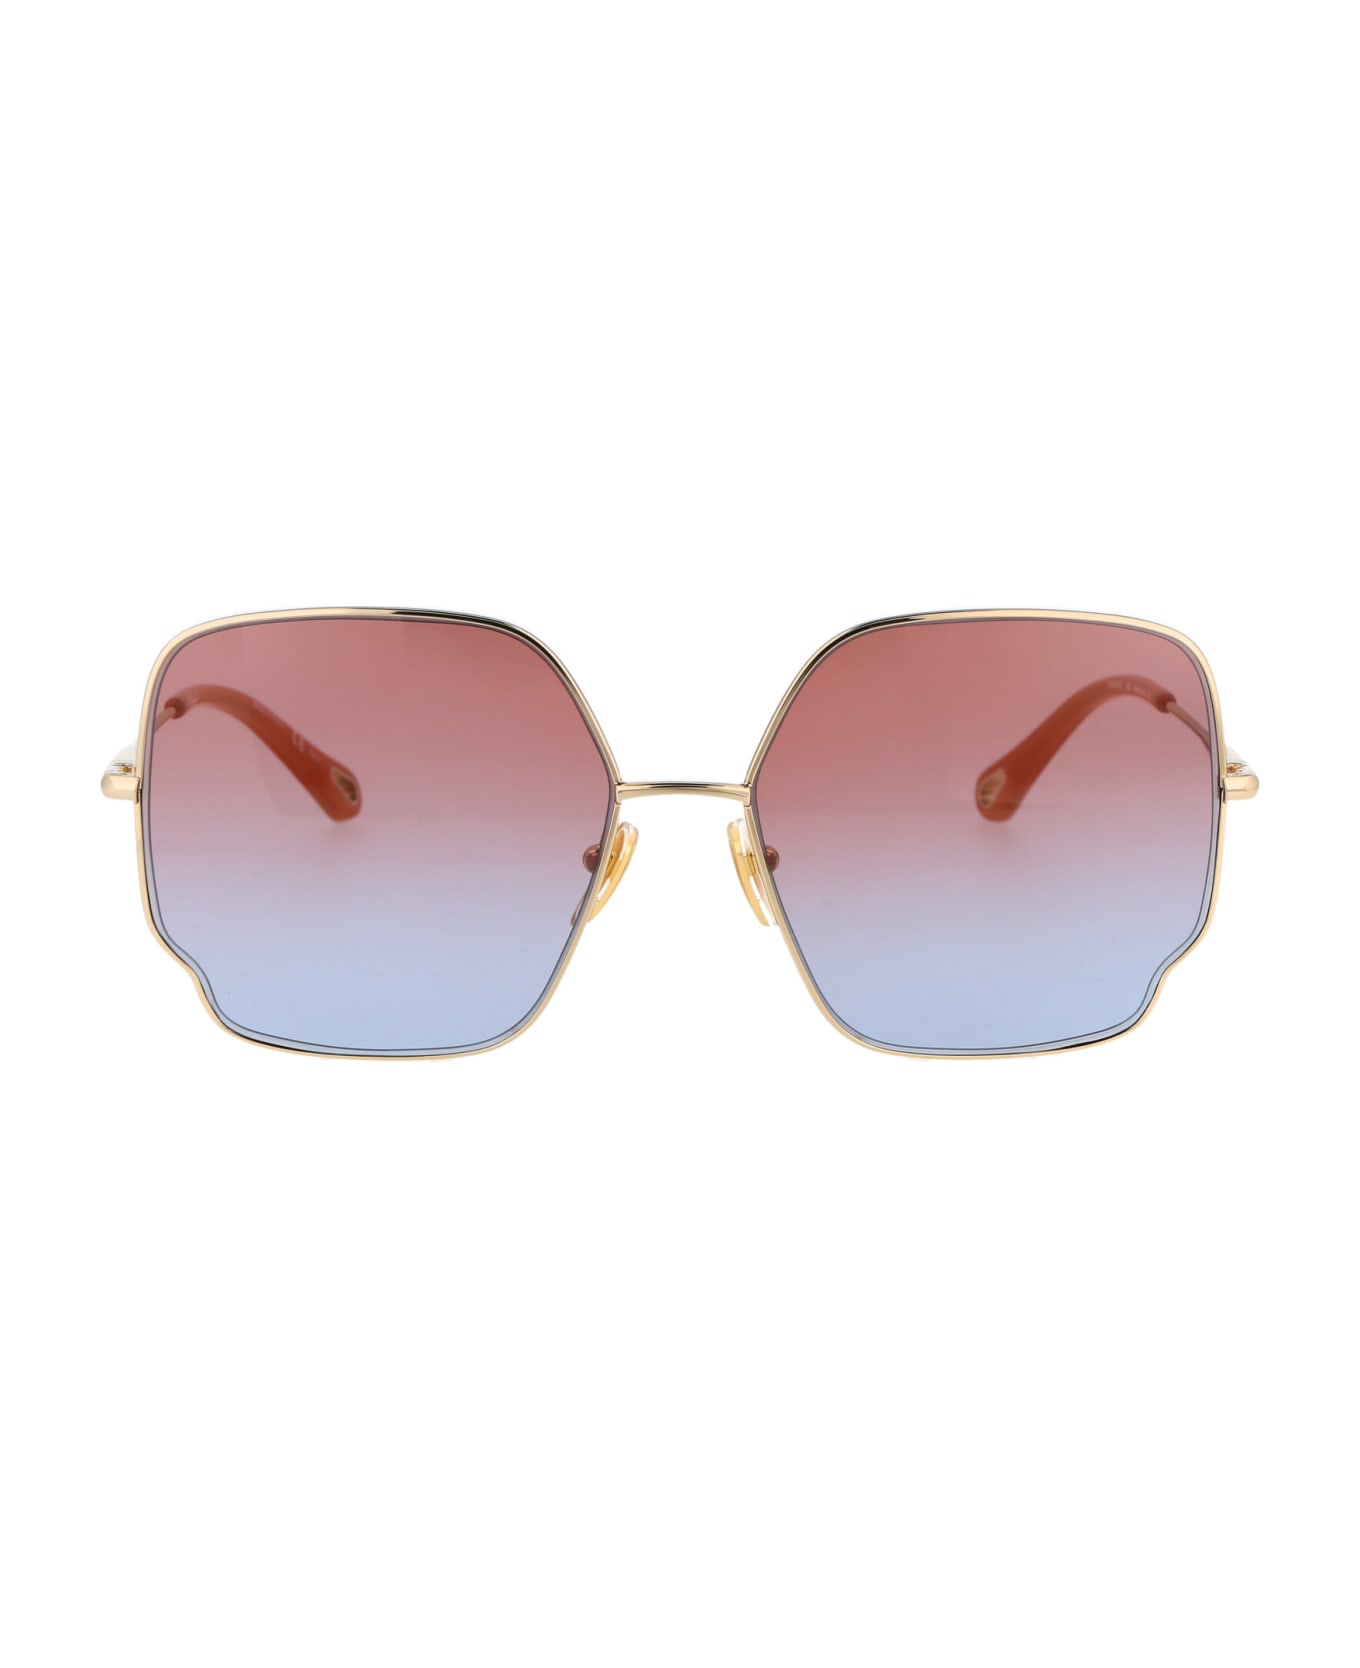 Chloé Eyewear Ch0092s Sunglasses - 002 GOLD GOLD RED